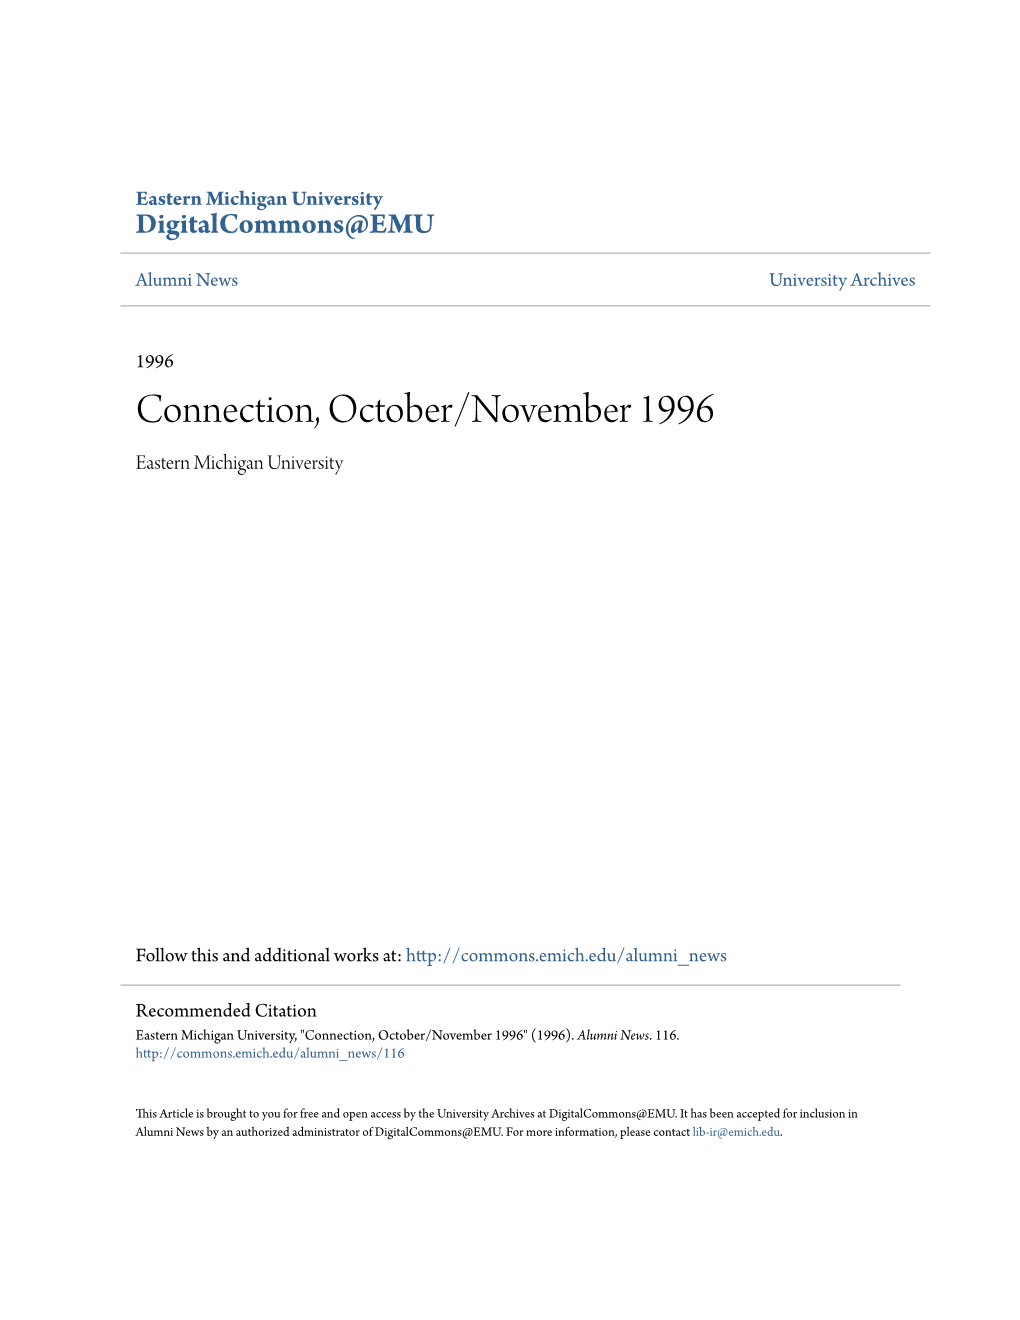 Connection, October/November 1996 Eastern Michigan University